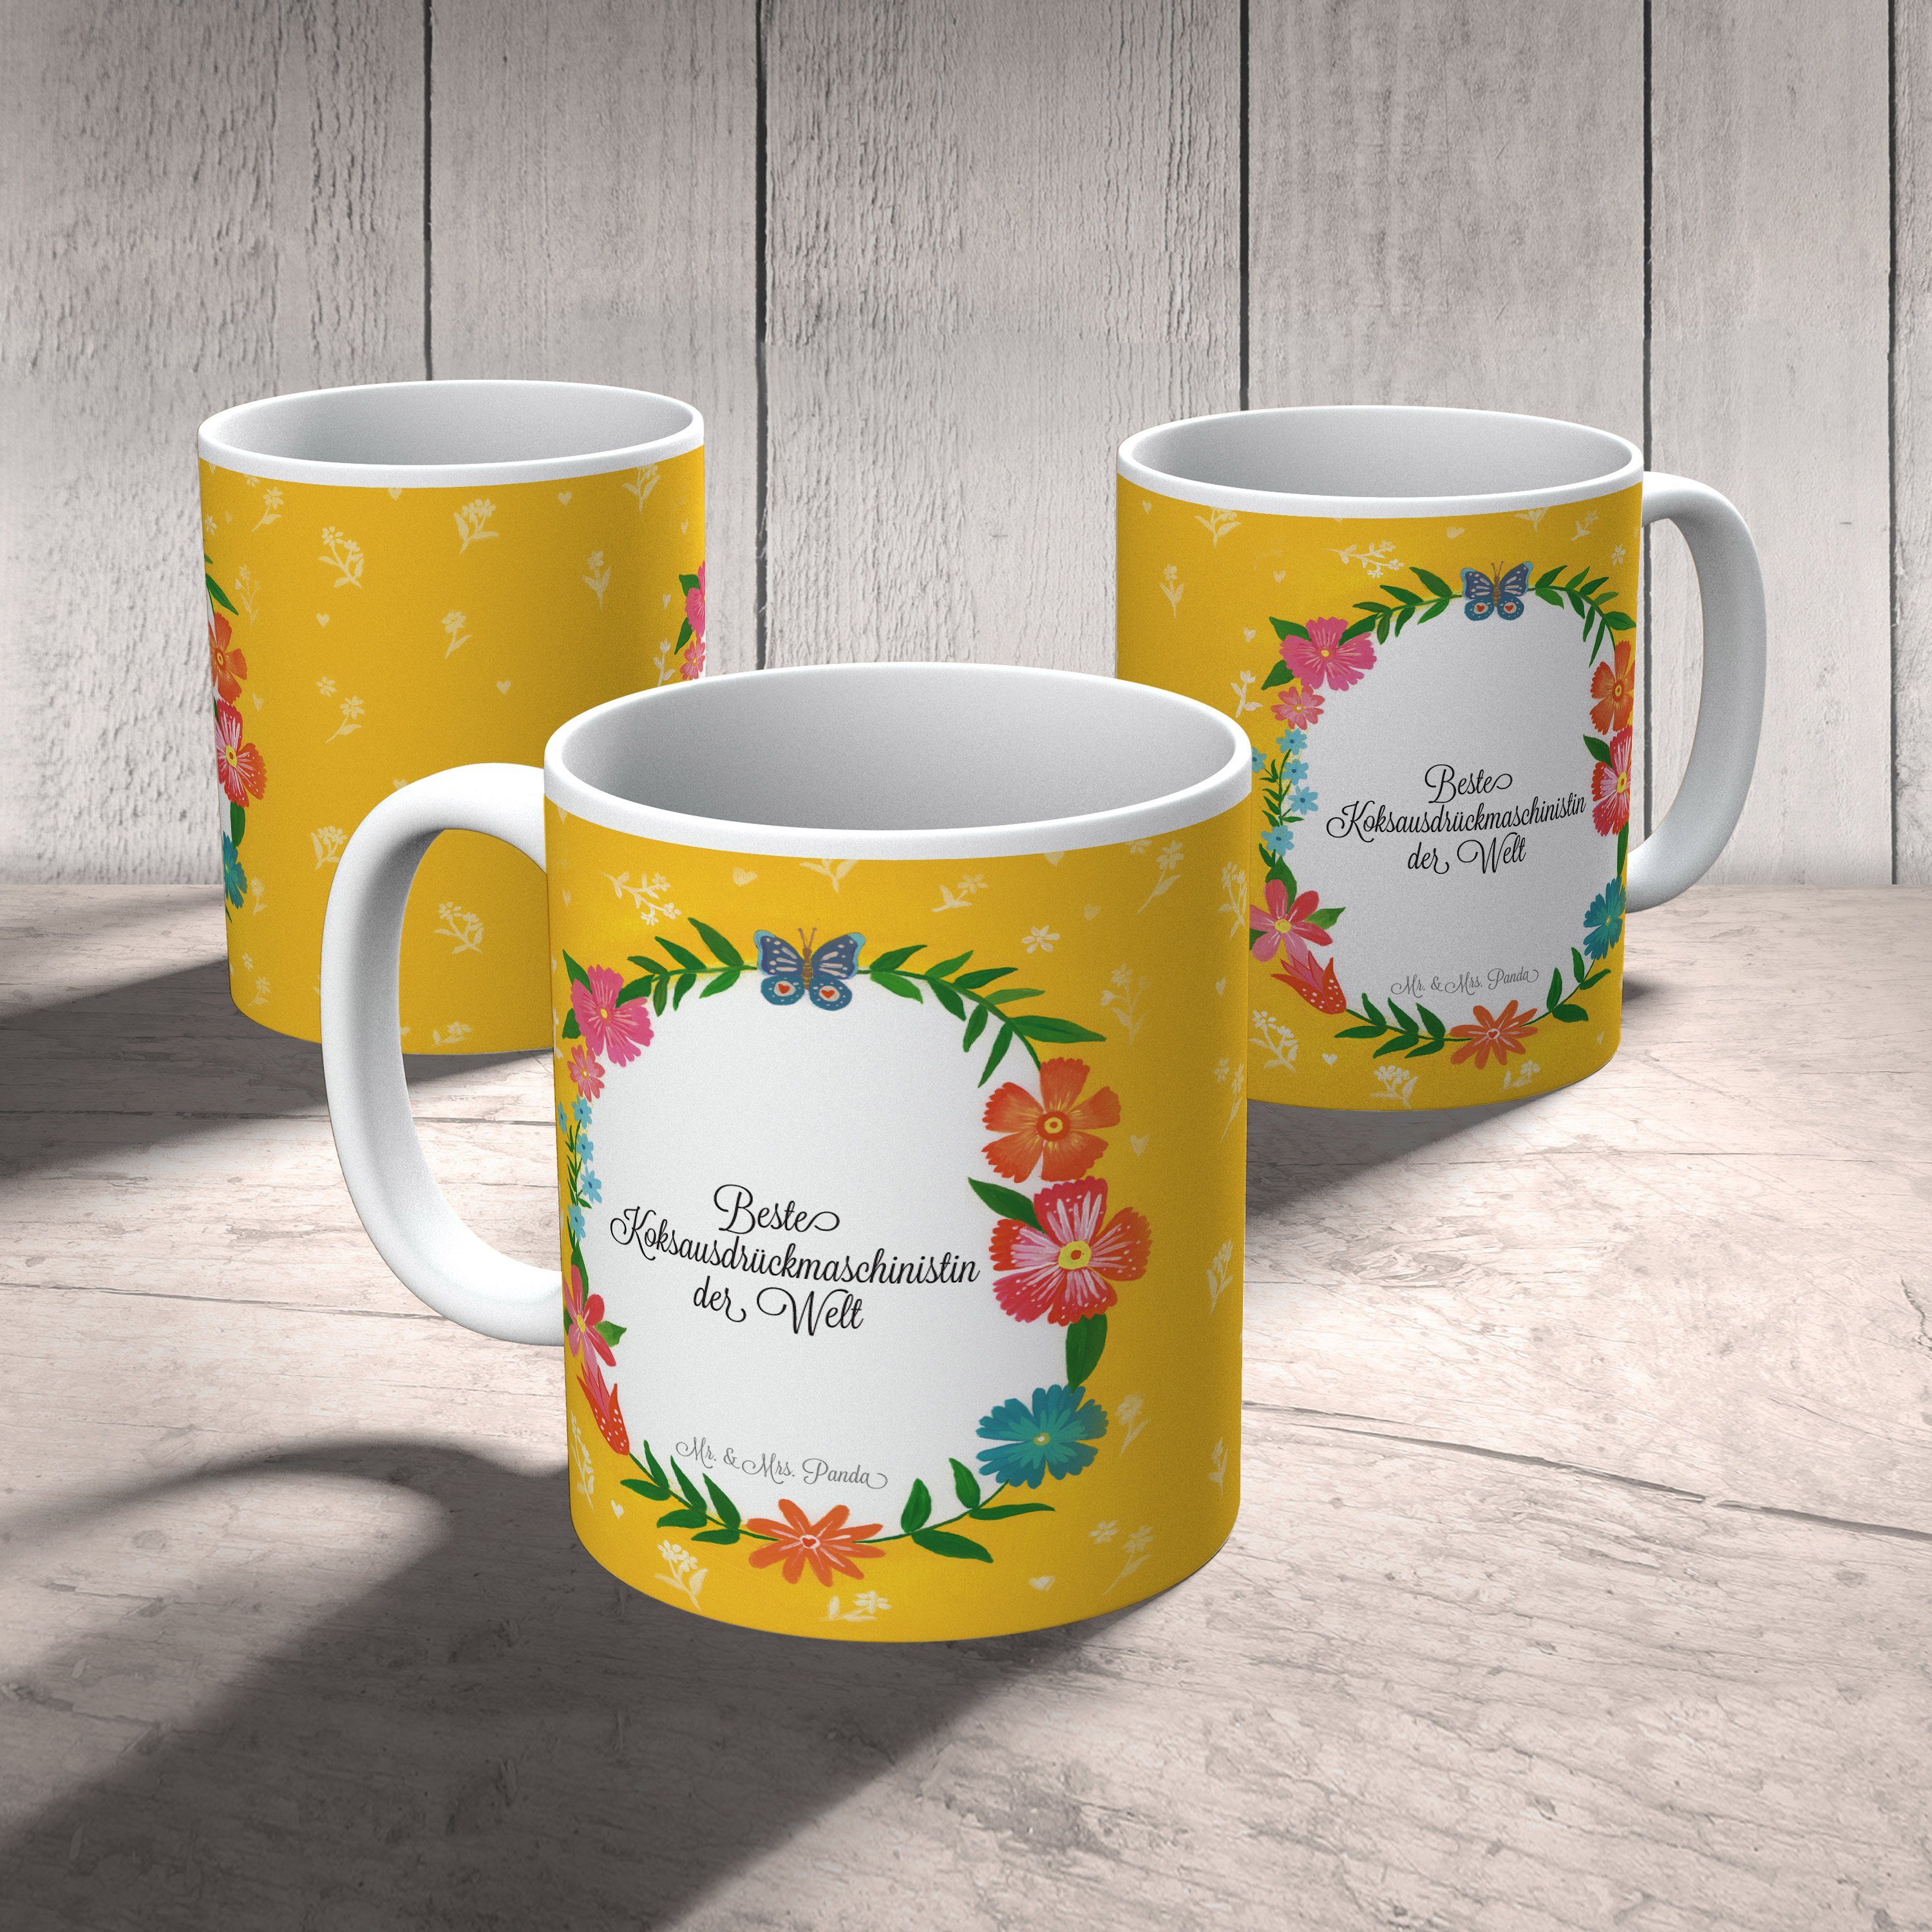 Mr. & Mrs. Bachelor, Geschenk, Tasse Tasse Sprüche, Keramik Panda Keramik, Koksausdrückmaschinistin 